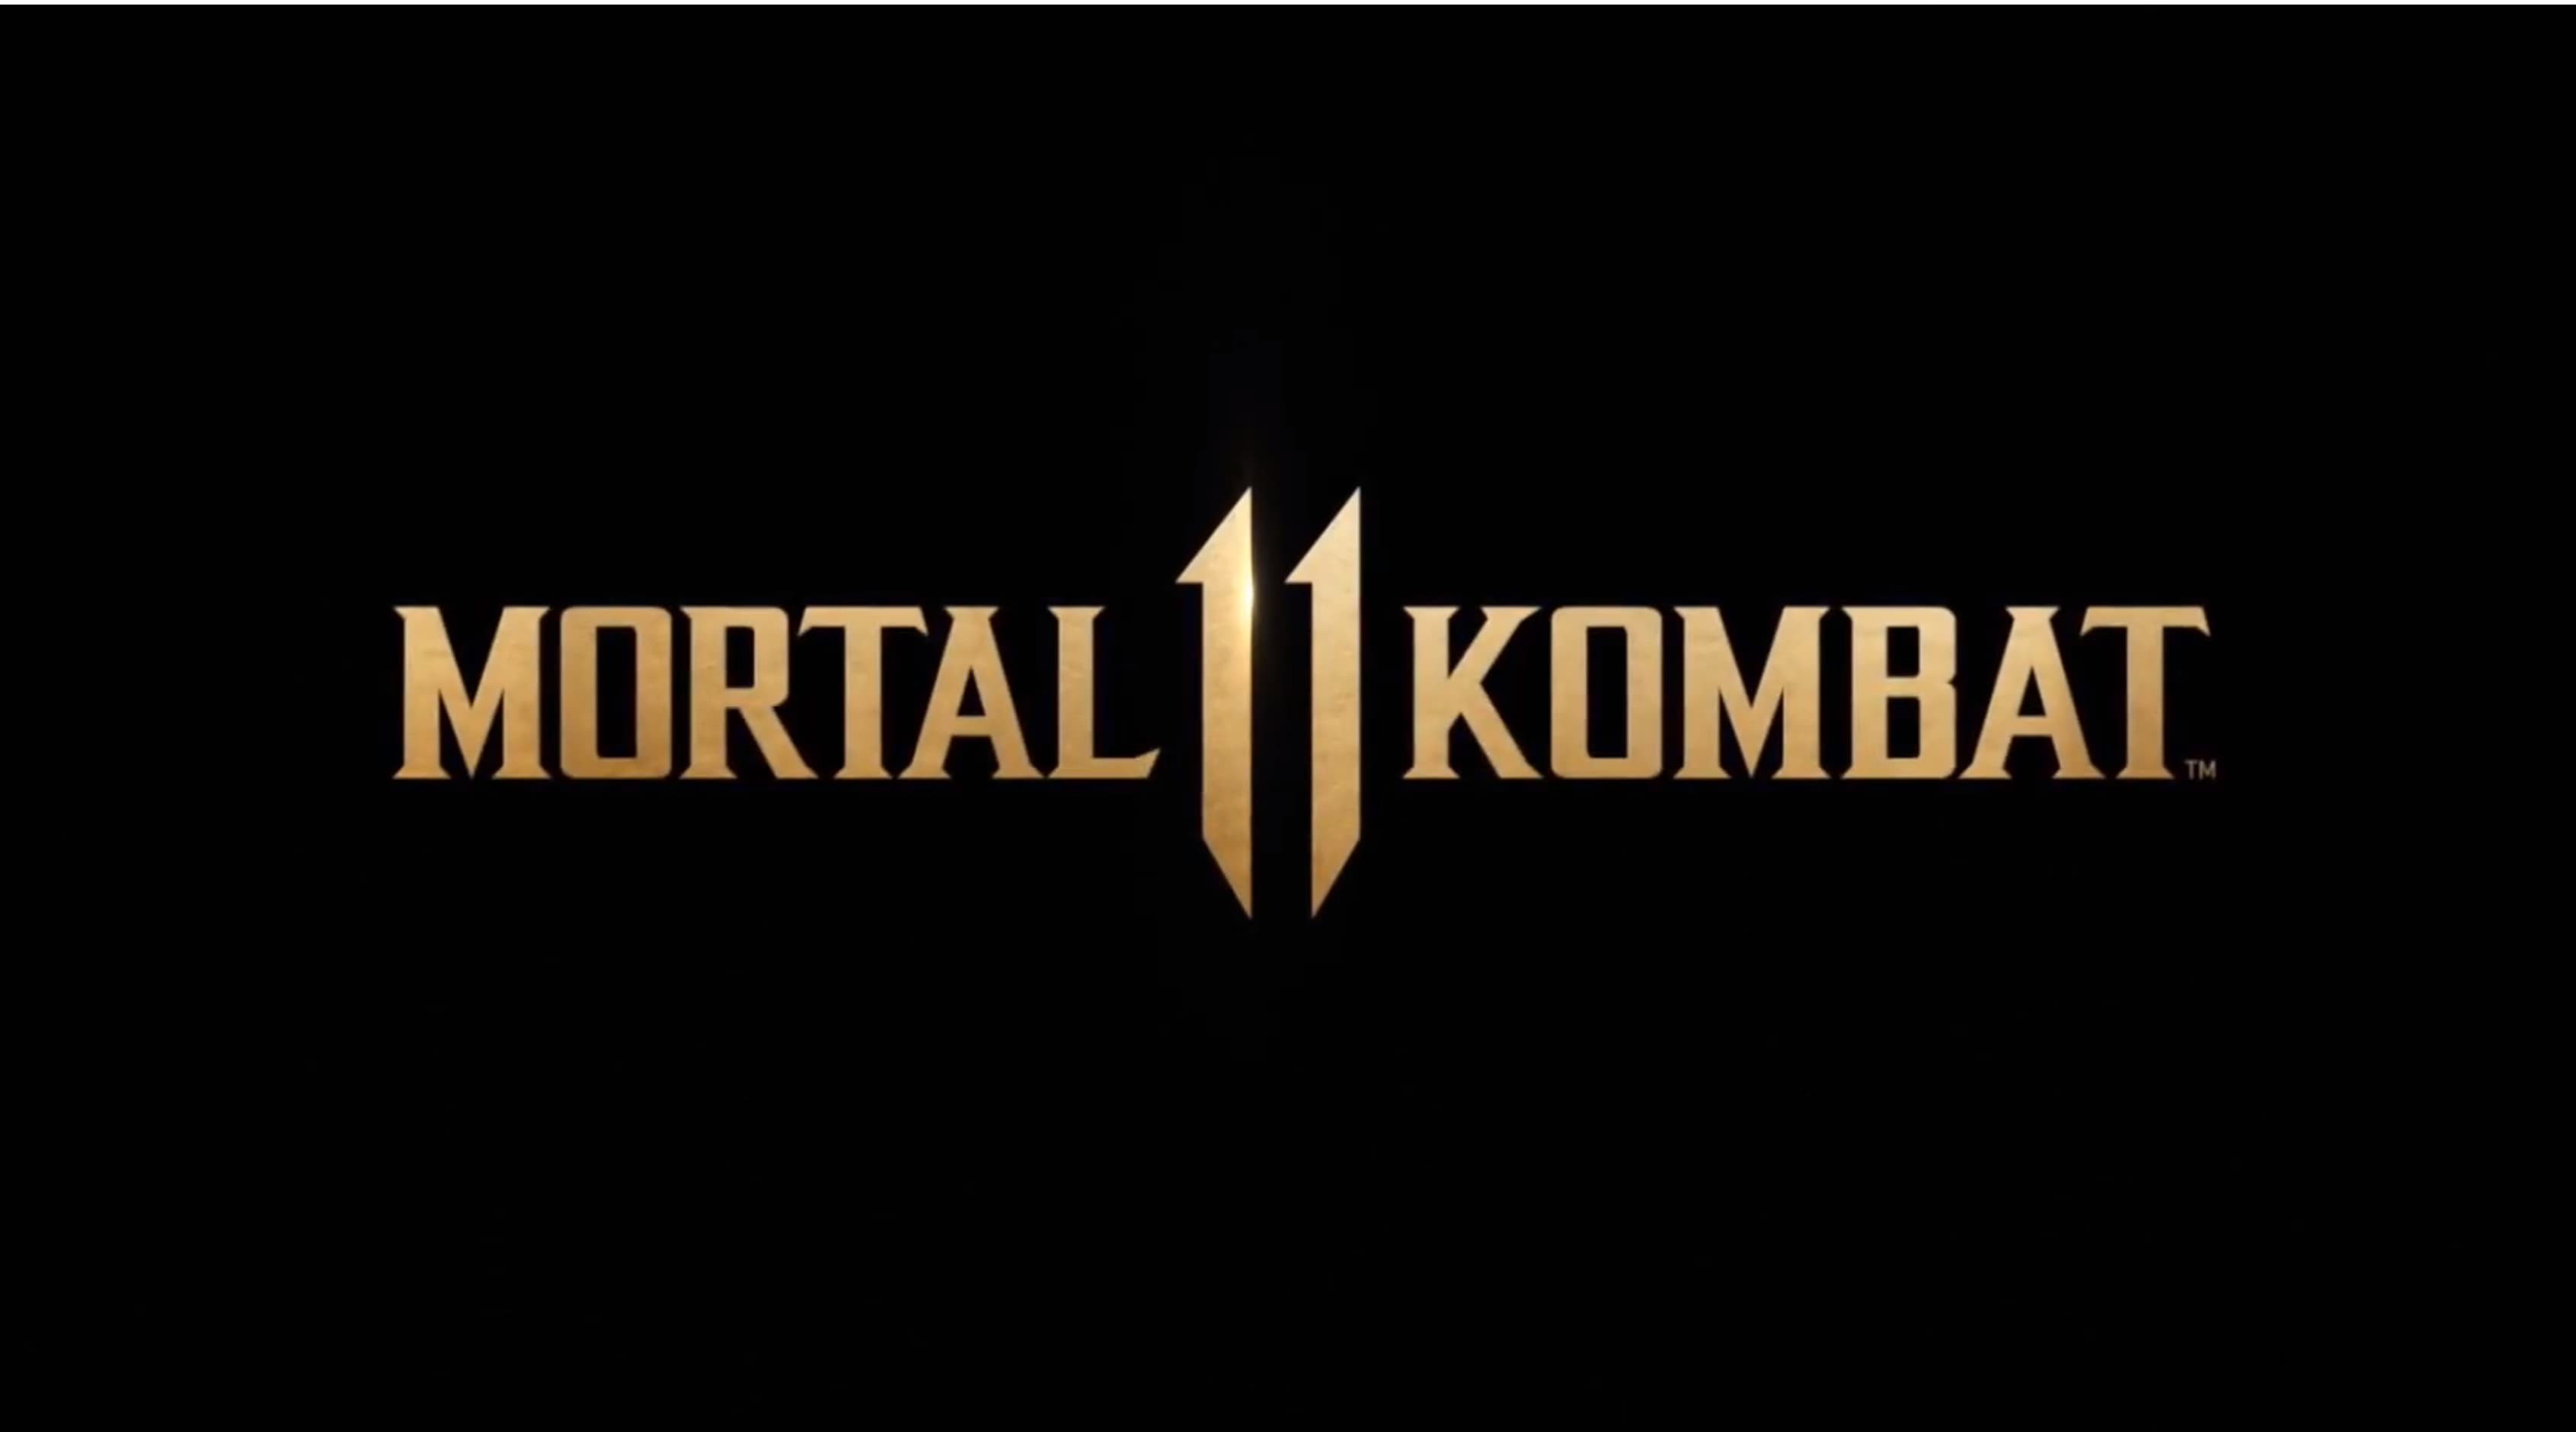 Mortal Kombat 11 titolo sfondo nero